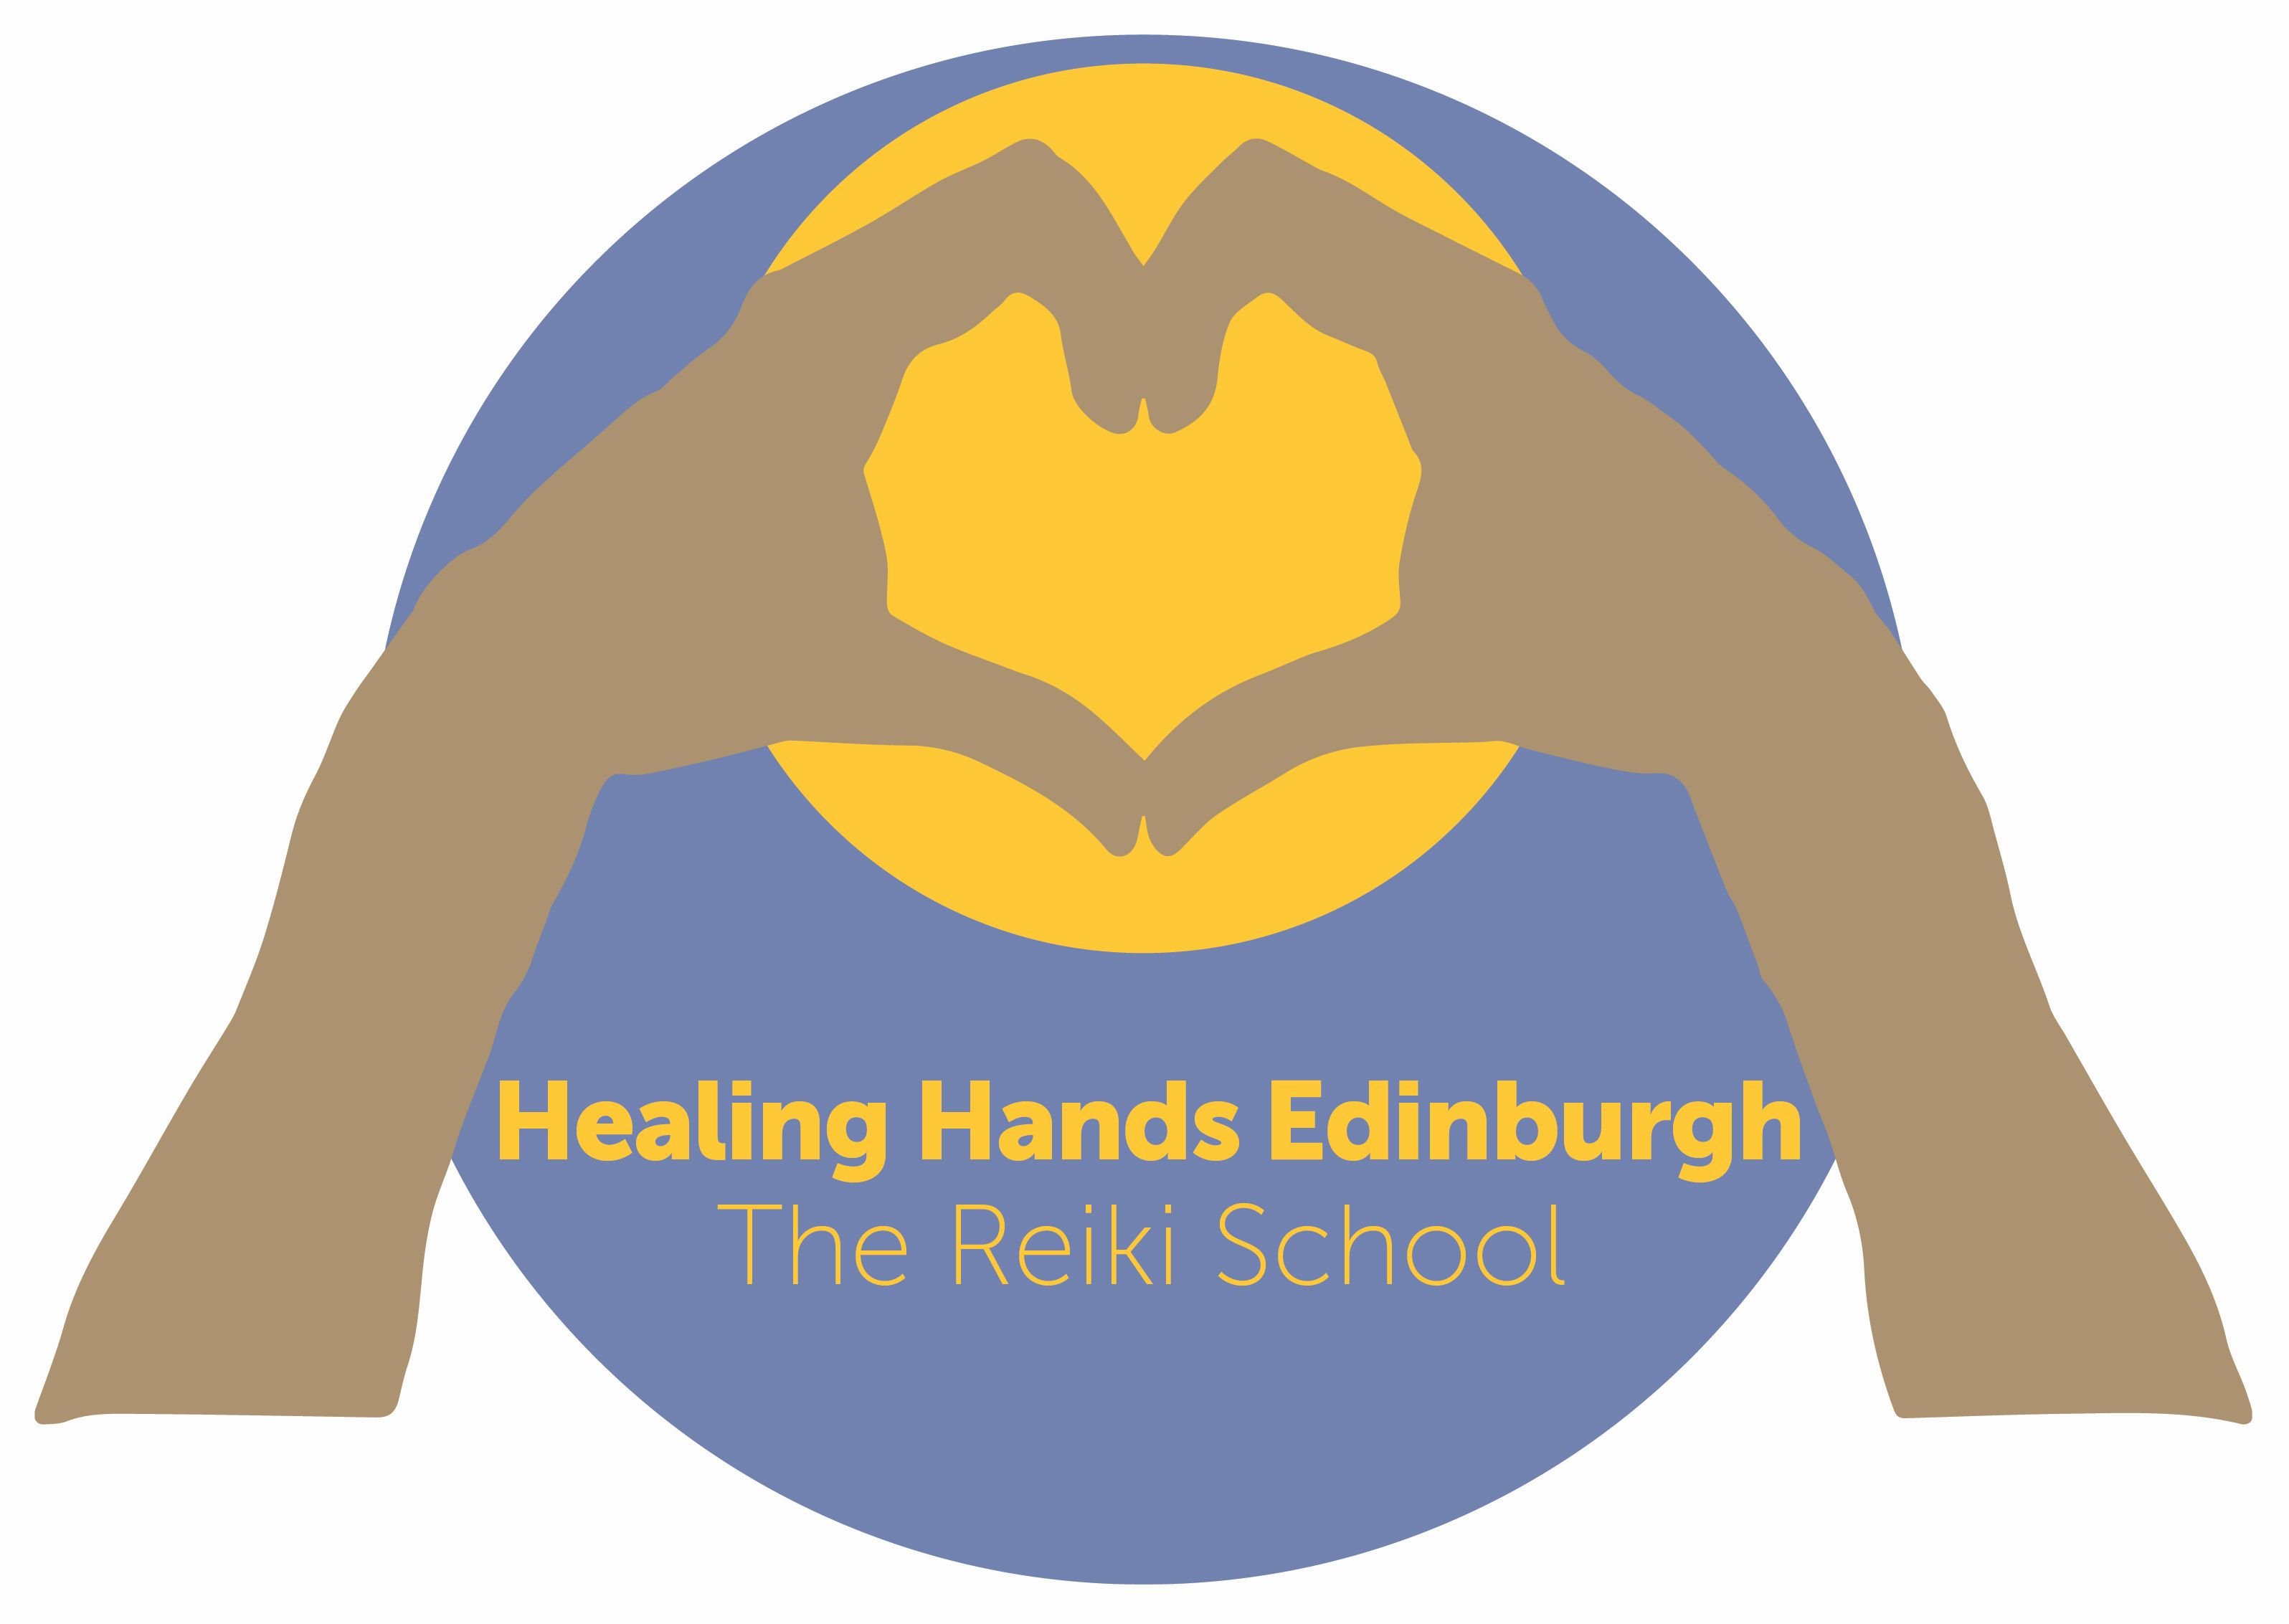 Healing Hands Edinburgh The Reiki School